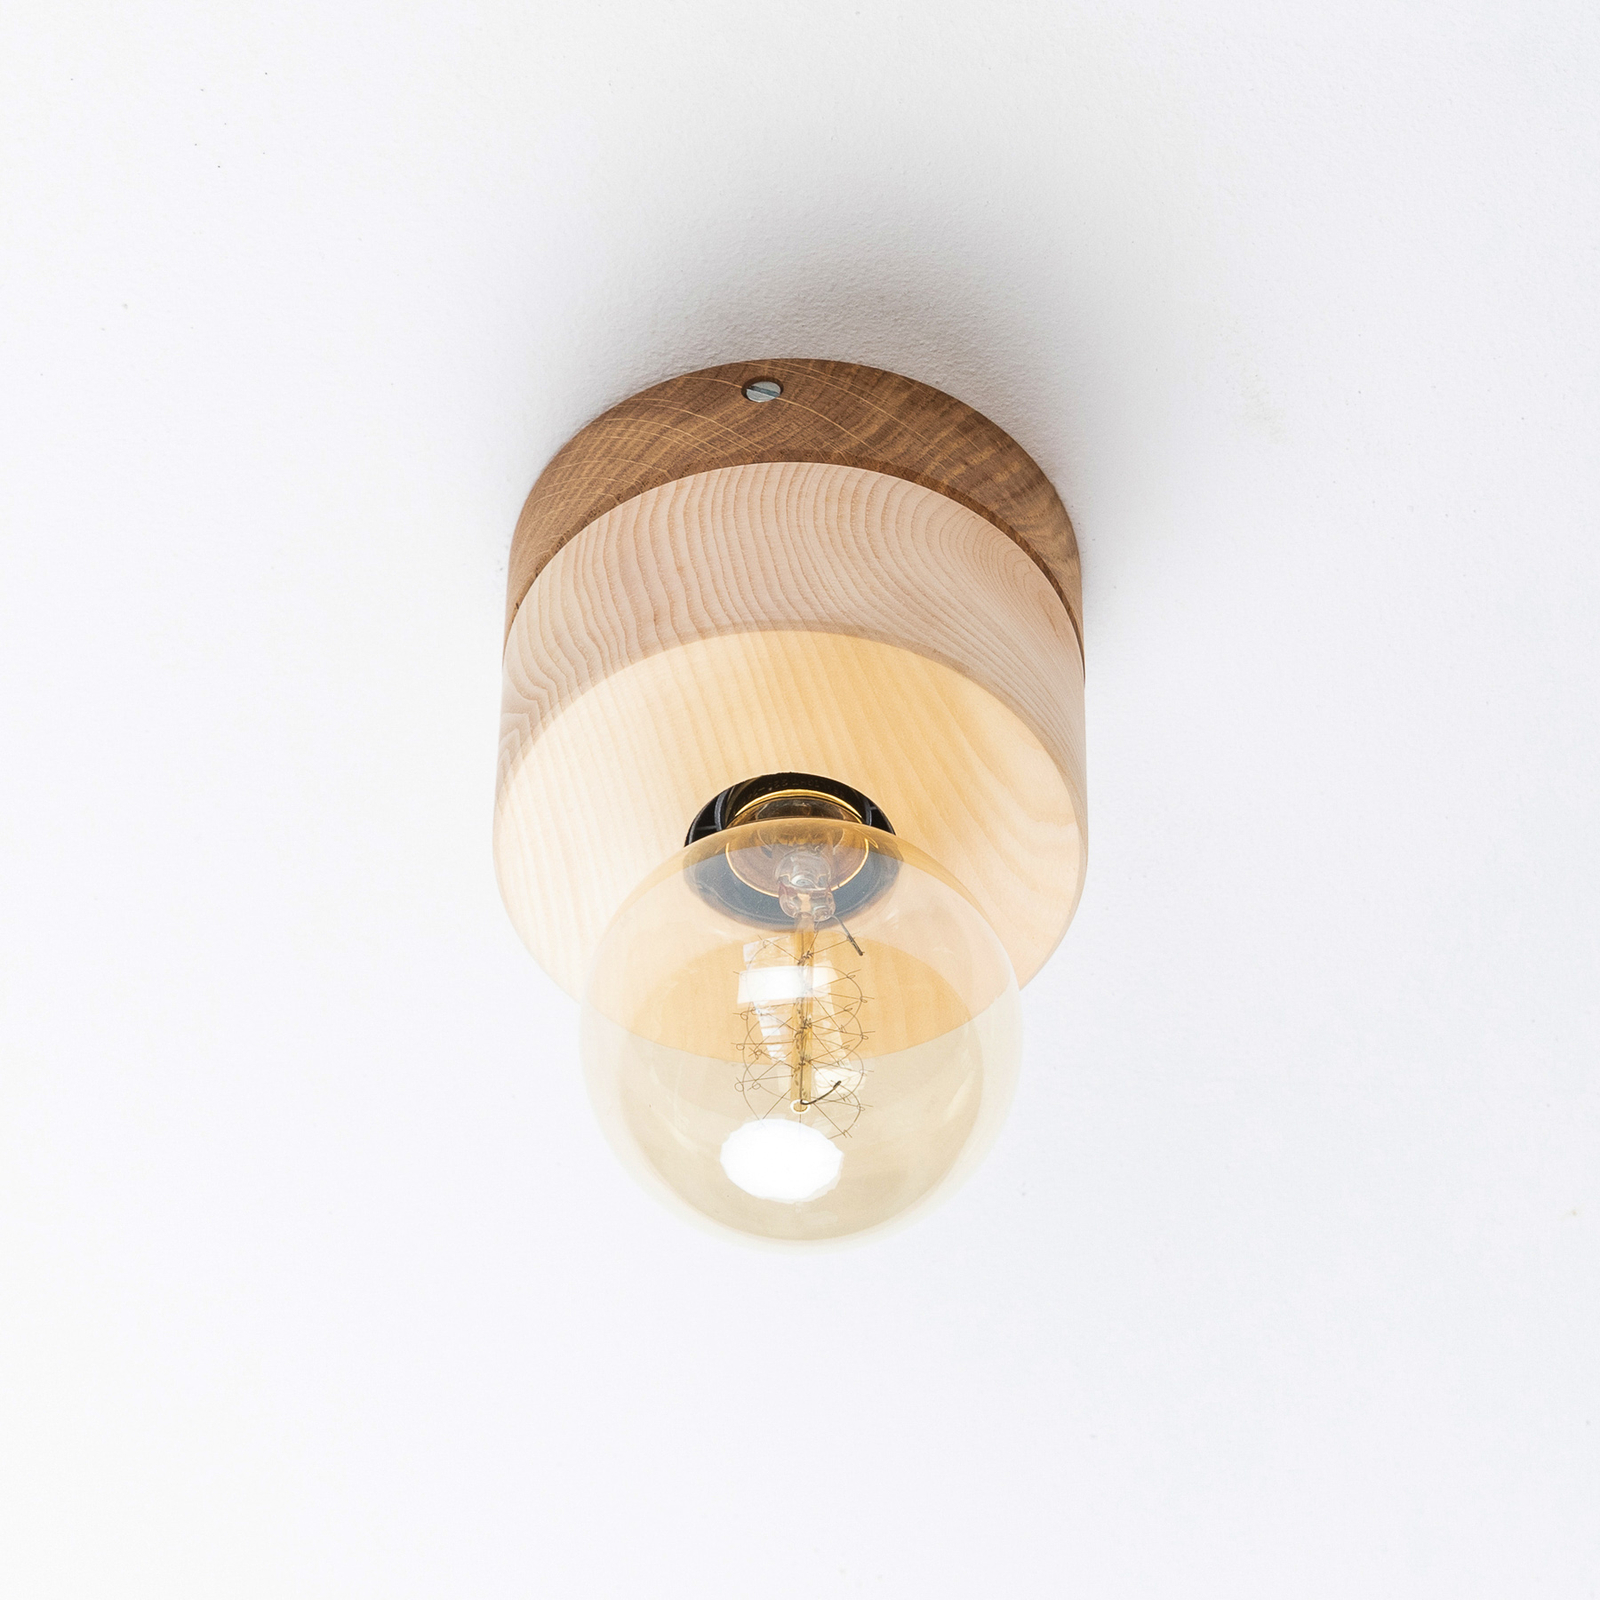 ALMUT 0239 ceiling light, vegan, Swiss pine/oak